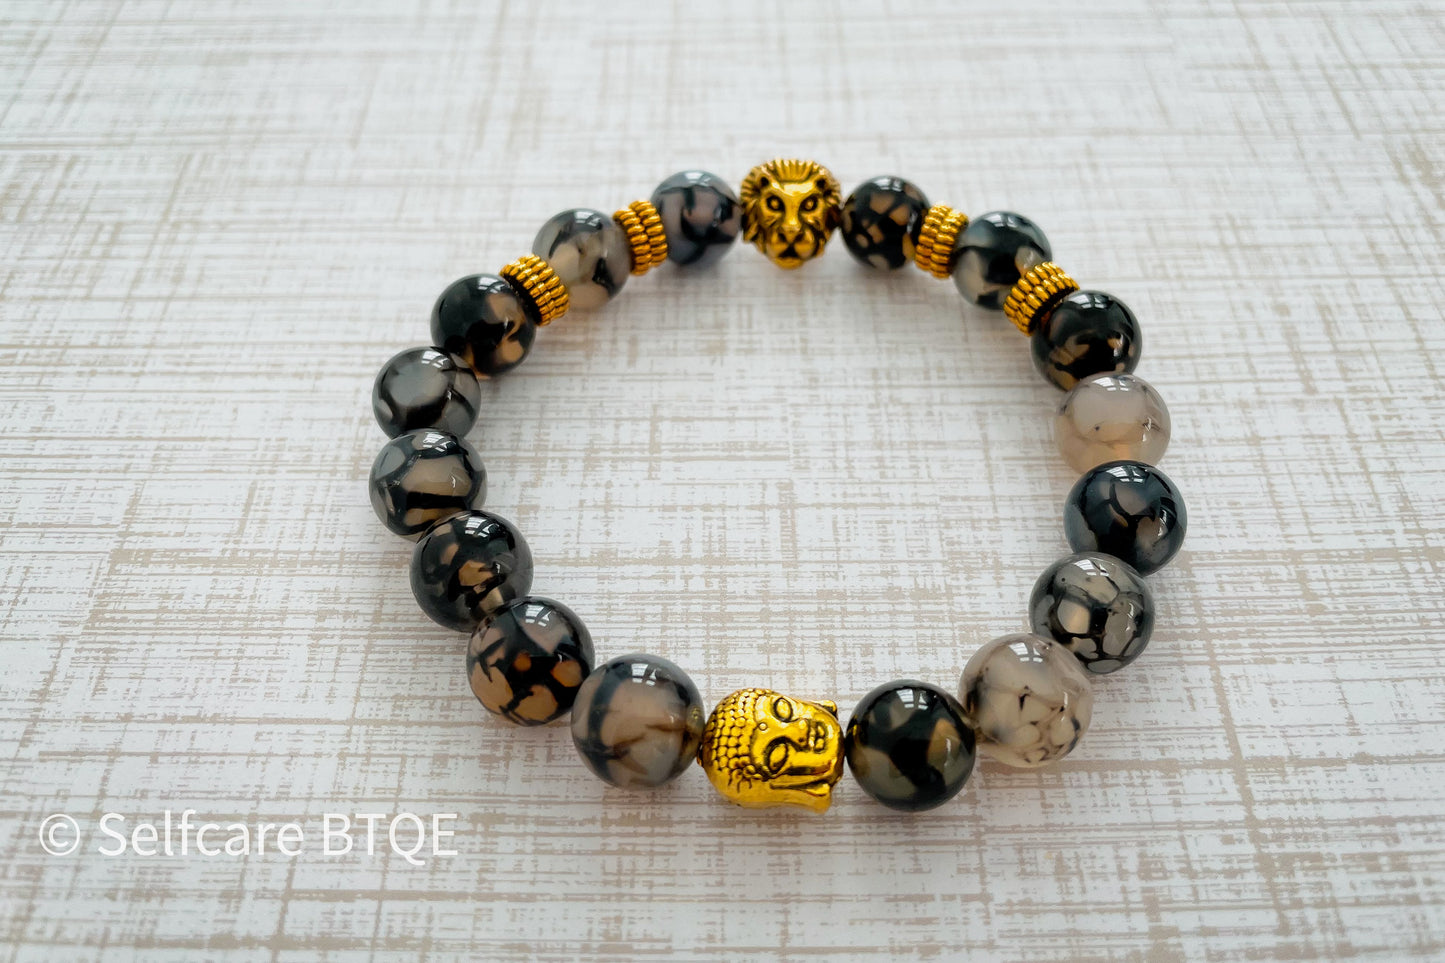 Lion & Buddha Bracelet with Black Agate Stones |10mm